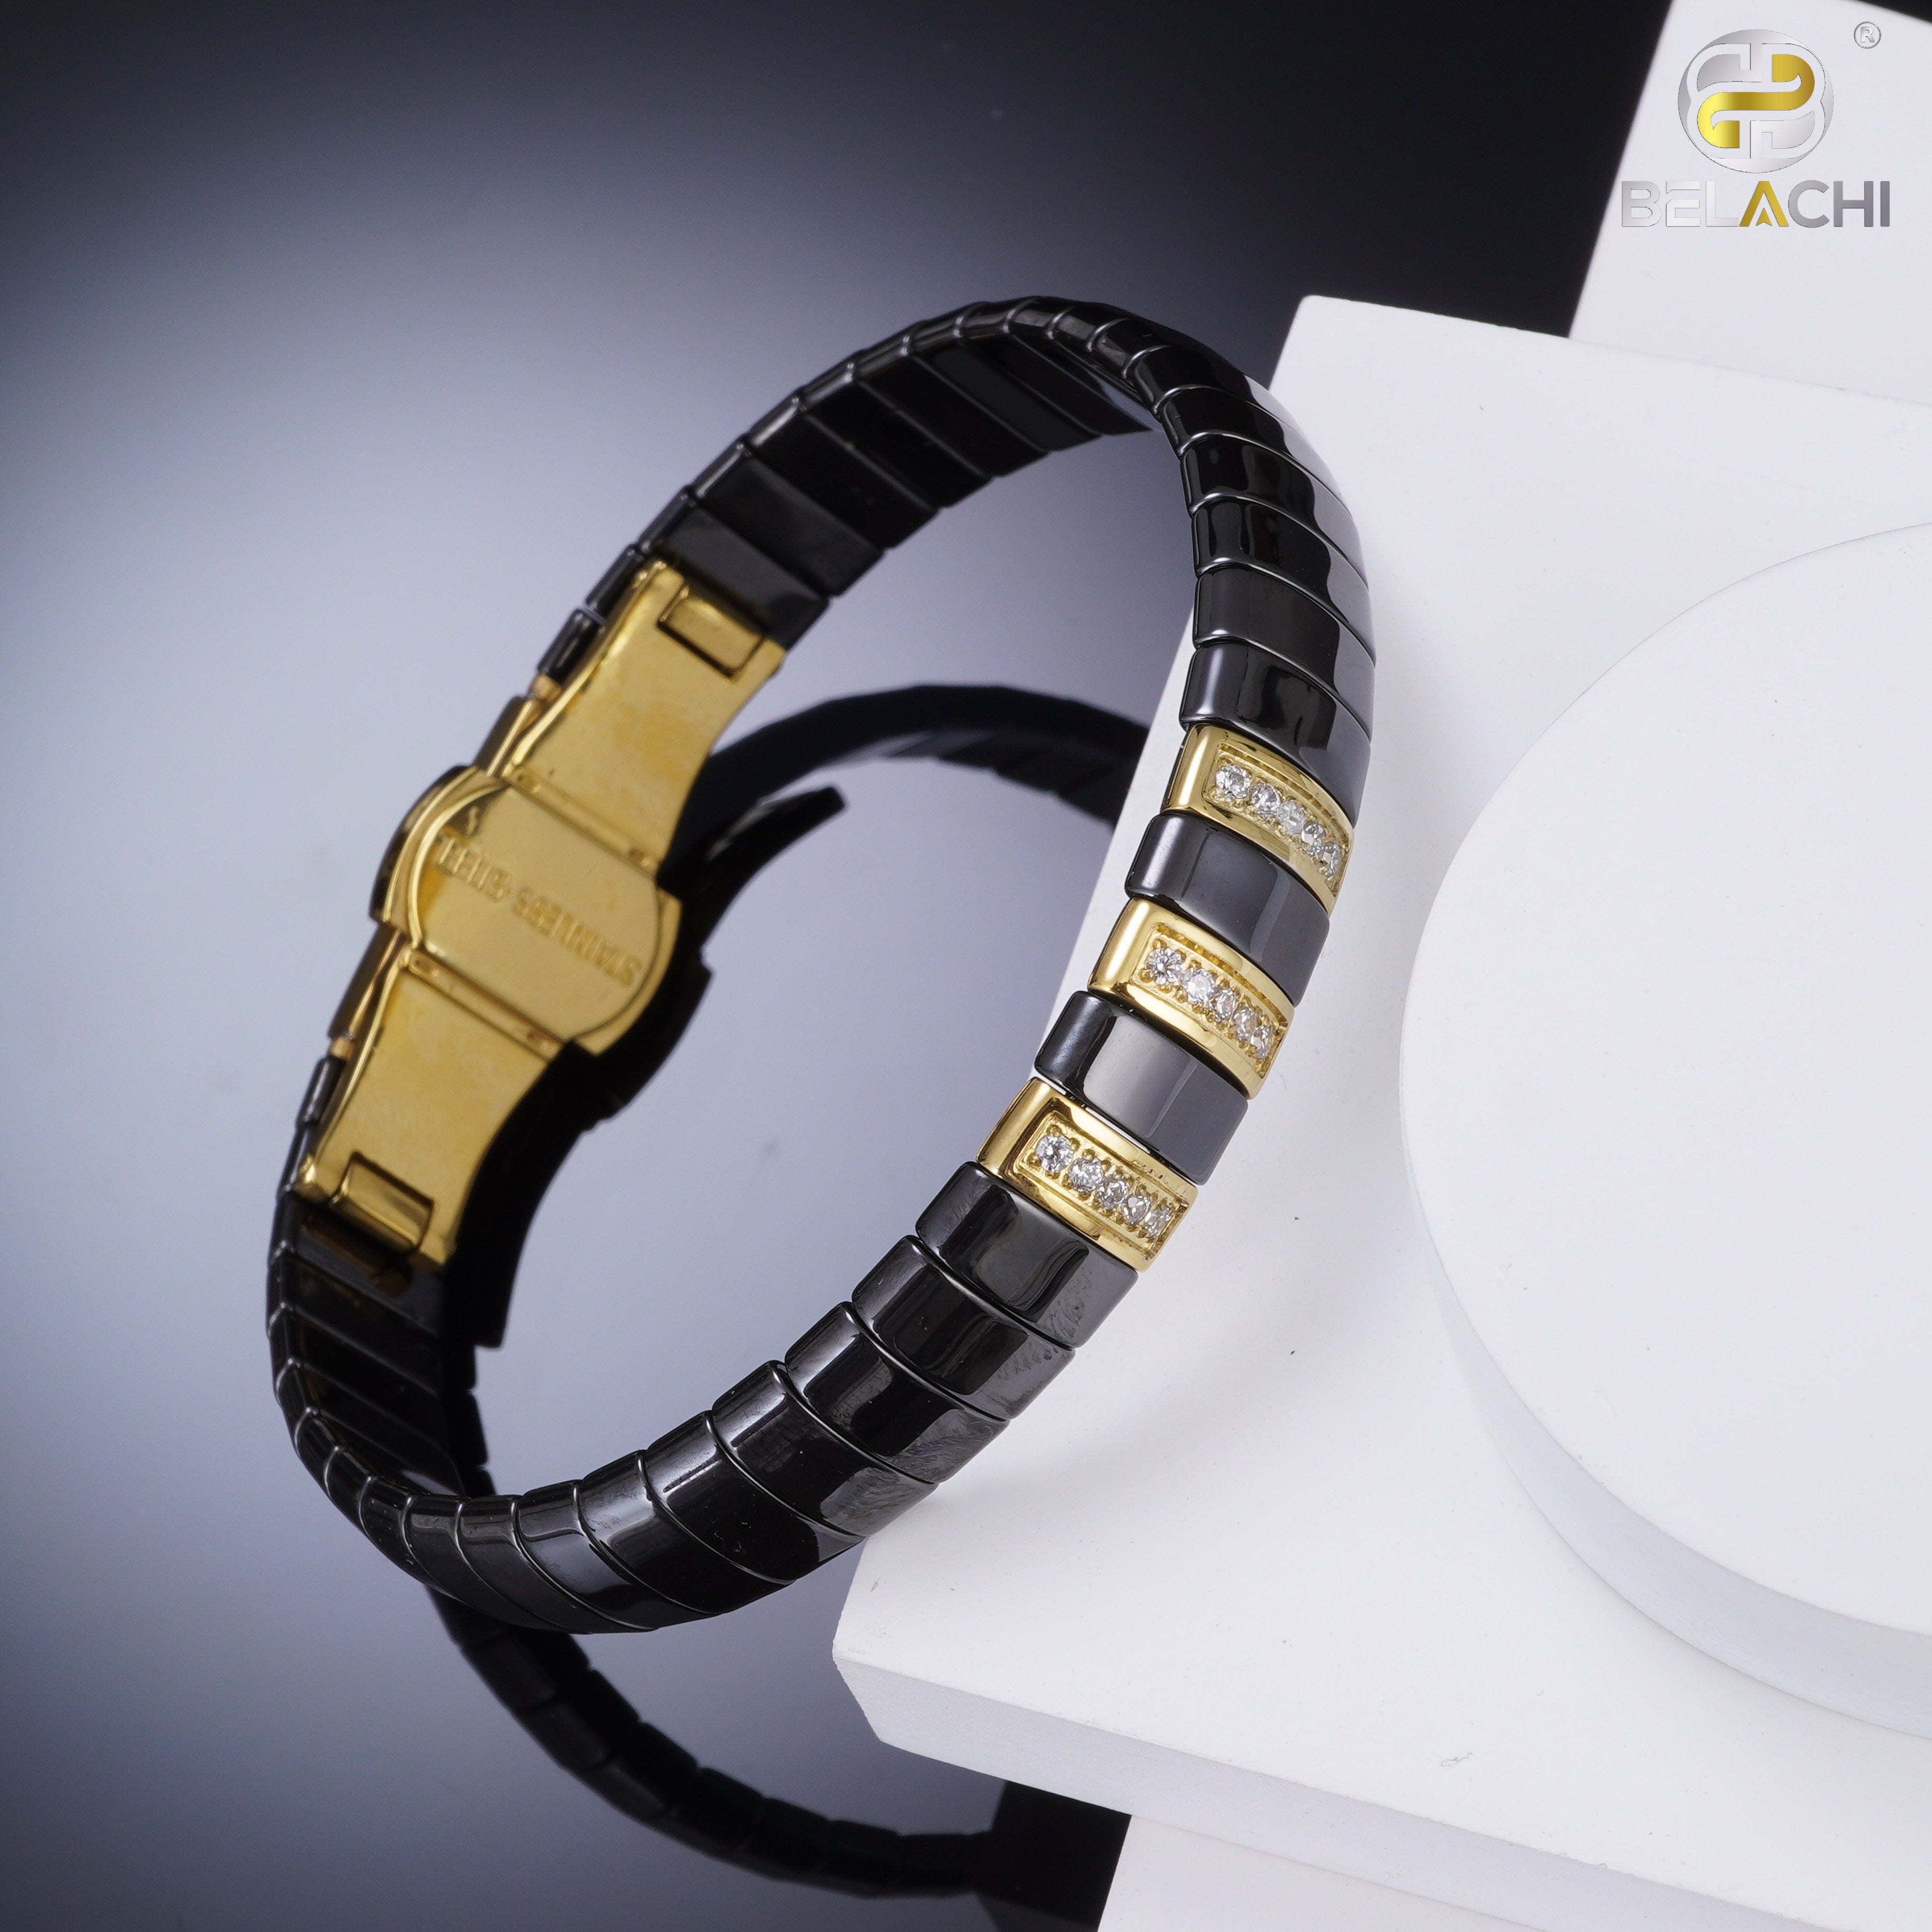 Platinum & Rose Gold Black Band Bracelet for Men - Flexible JL PTB 108